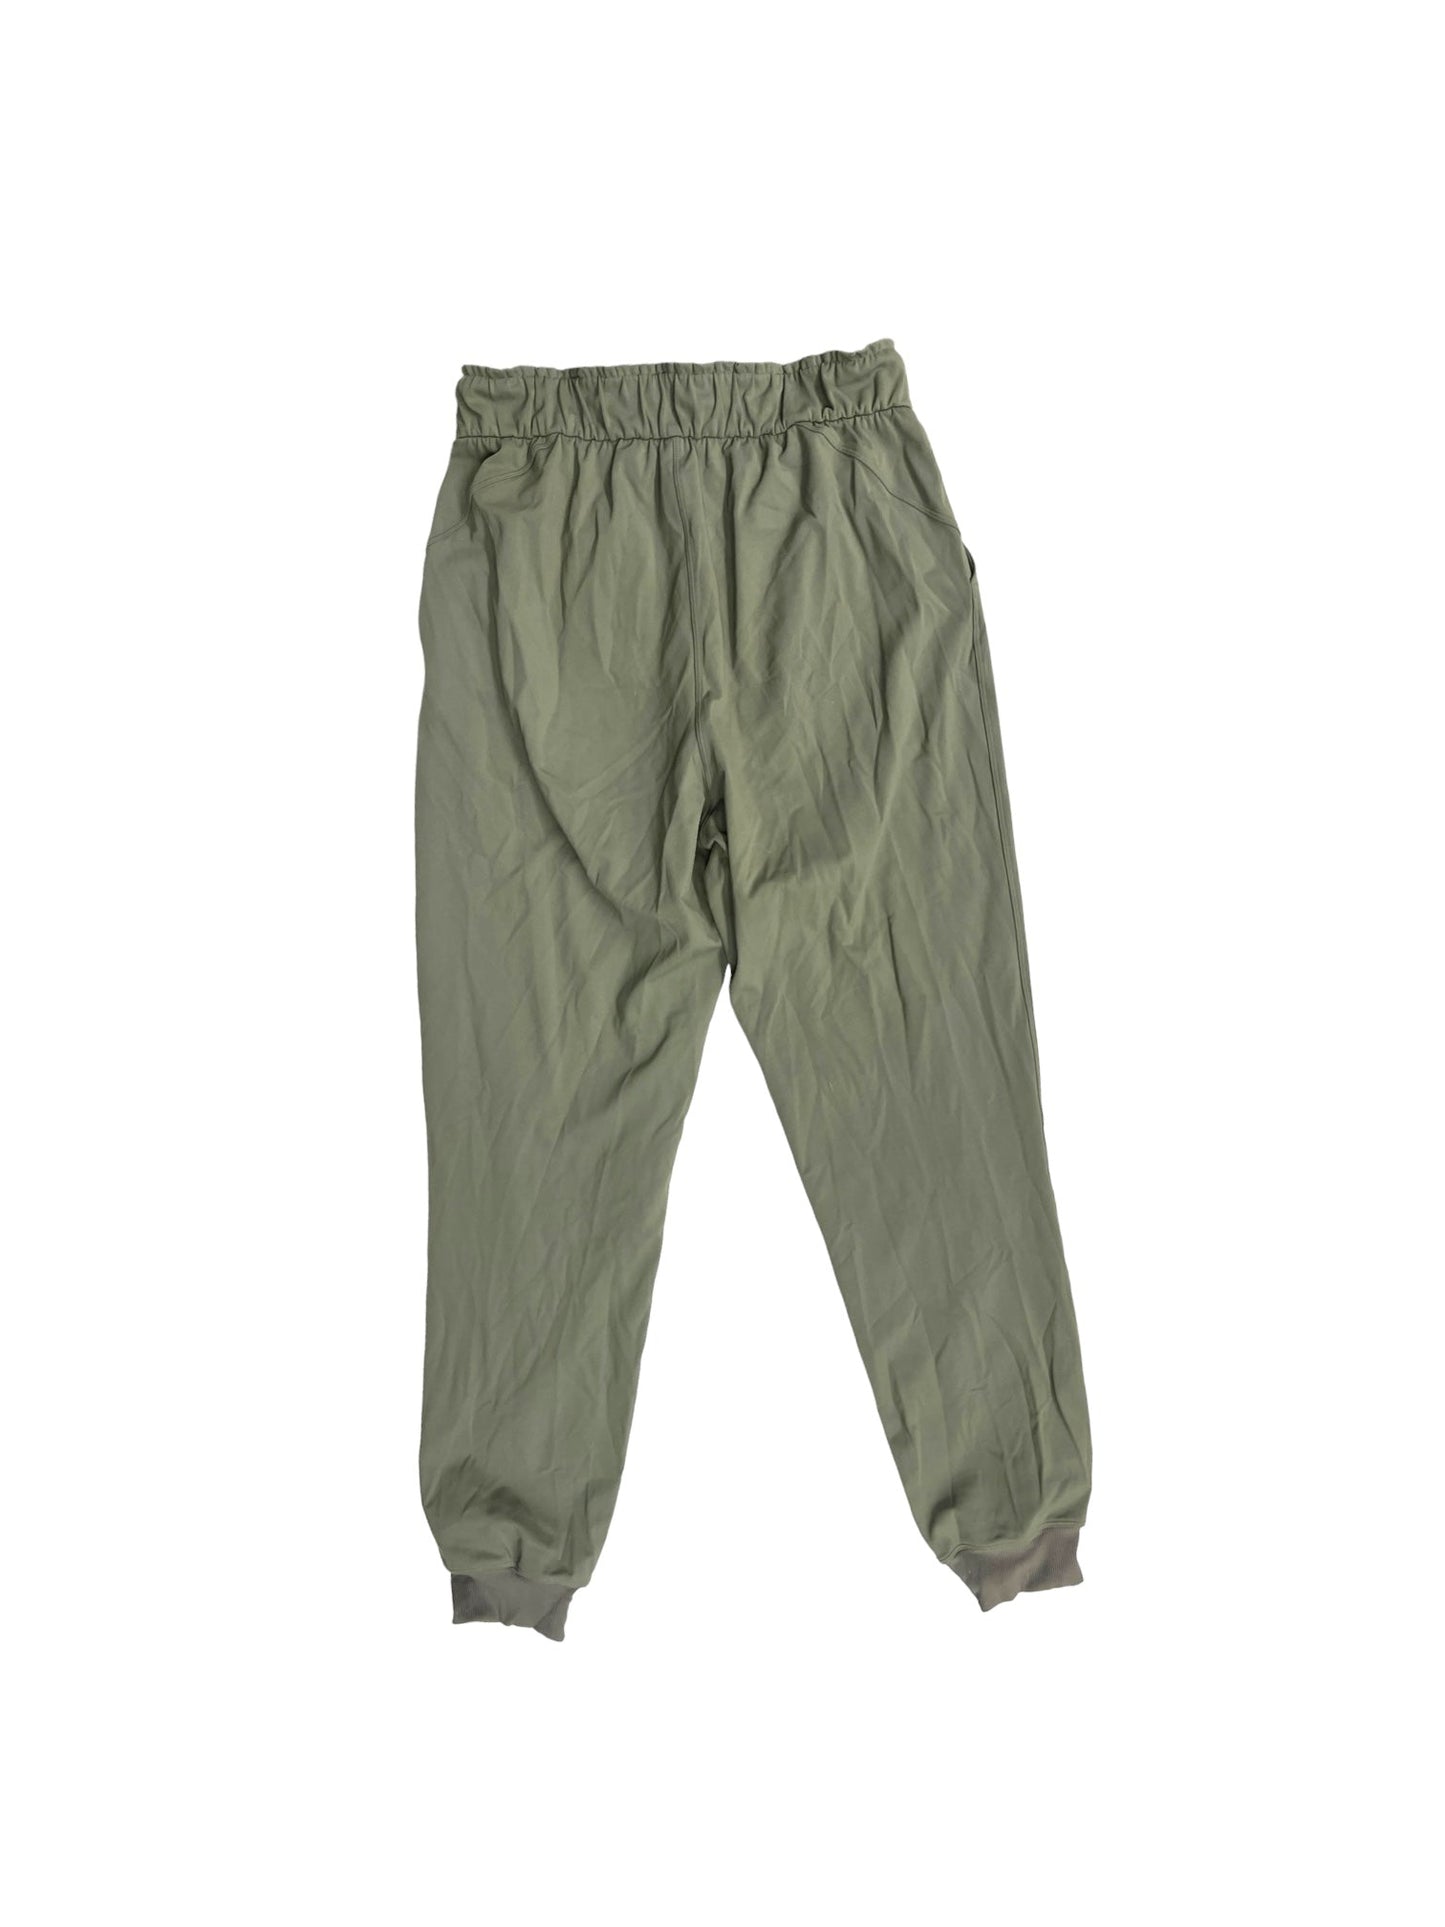 Green Athletic Pants Lululemon, Size 6